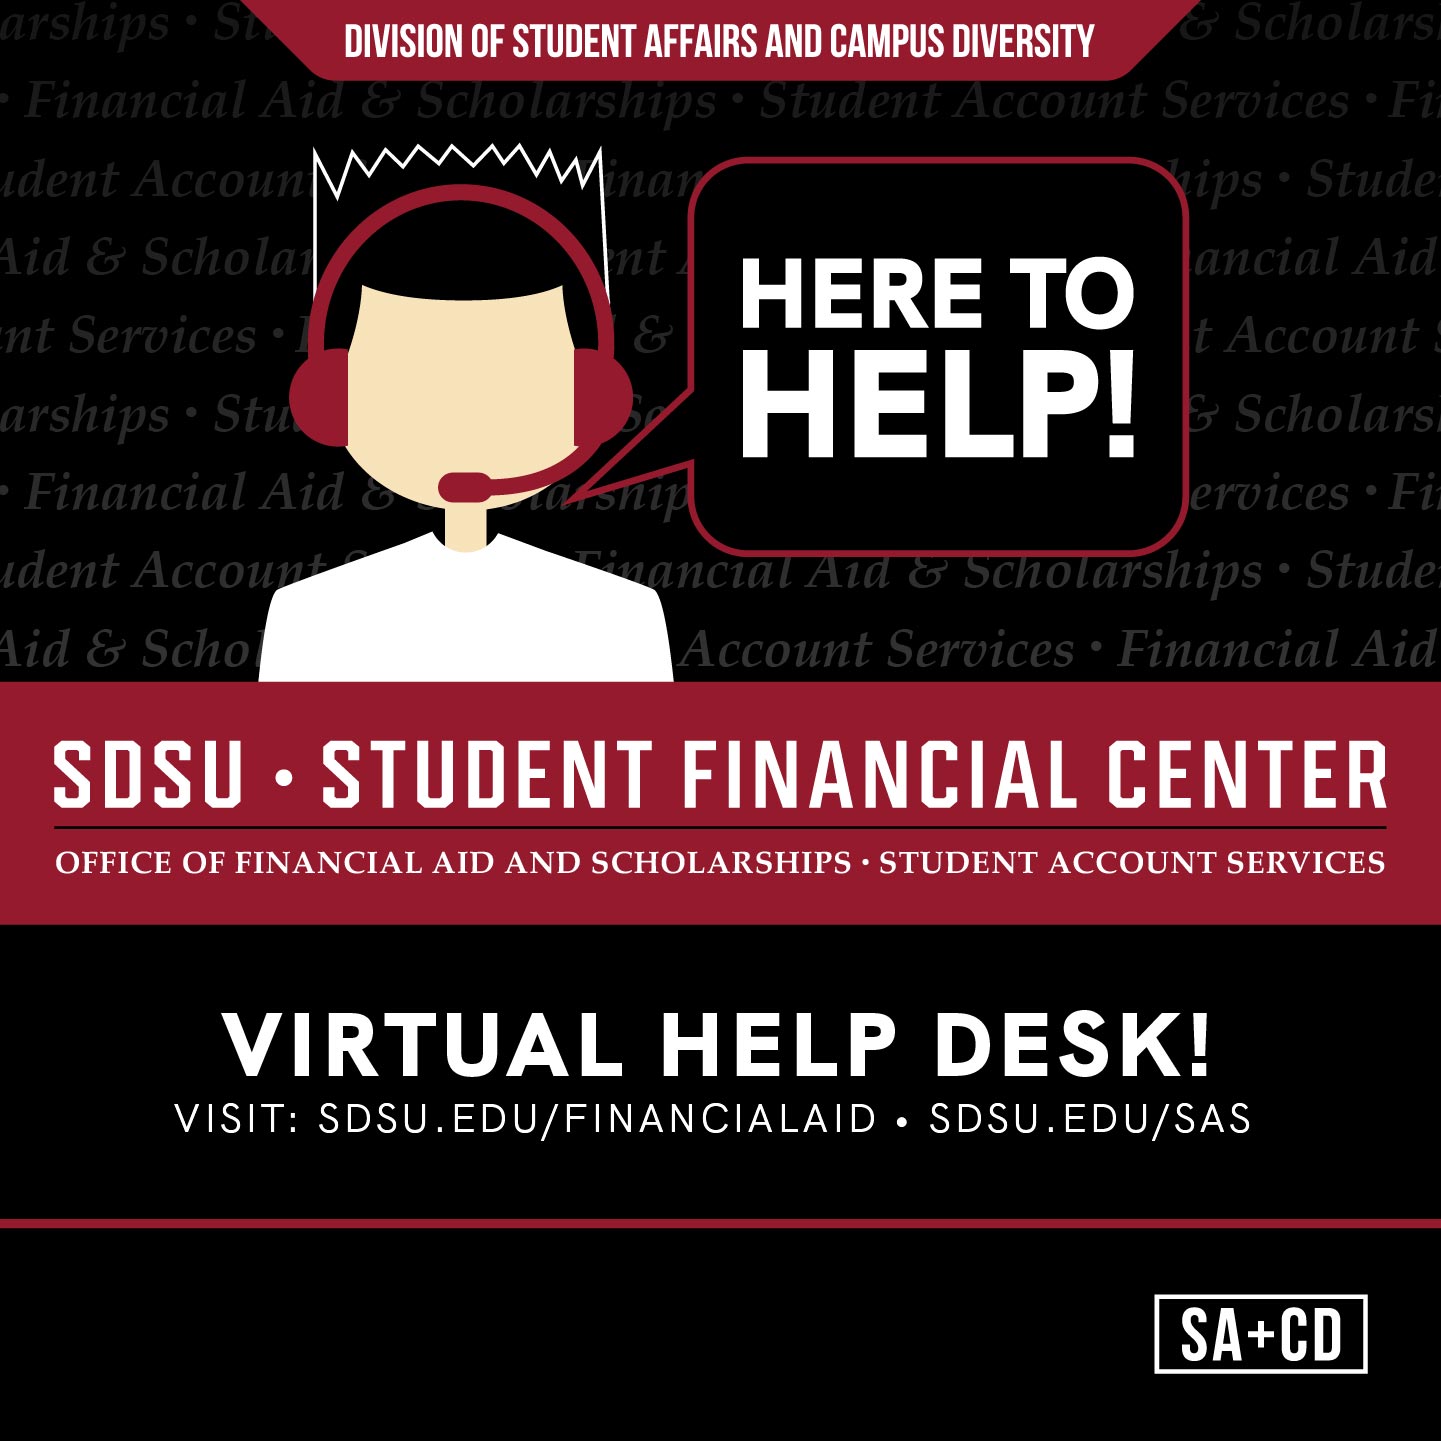 Student Financial Center now live via Zoom